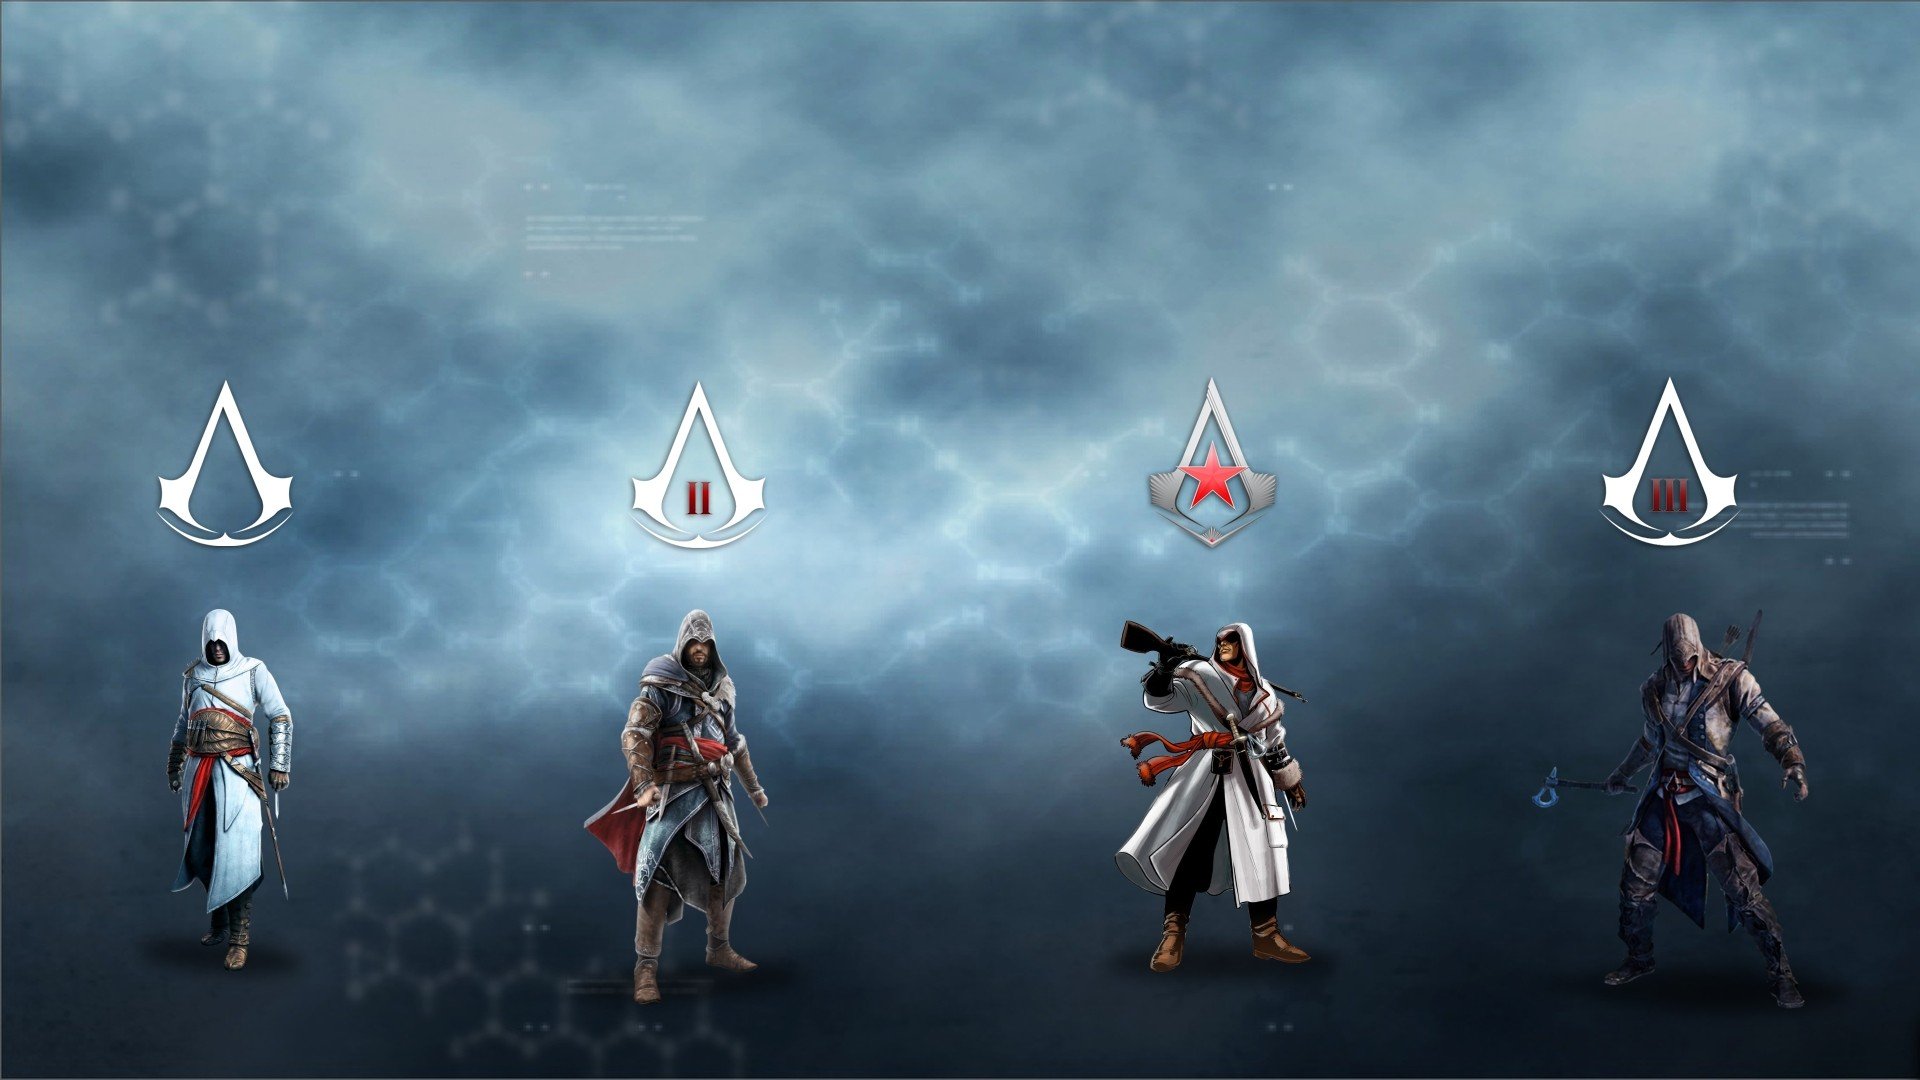 Assassin's Creed HD Wallpaper